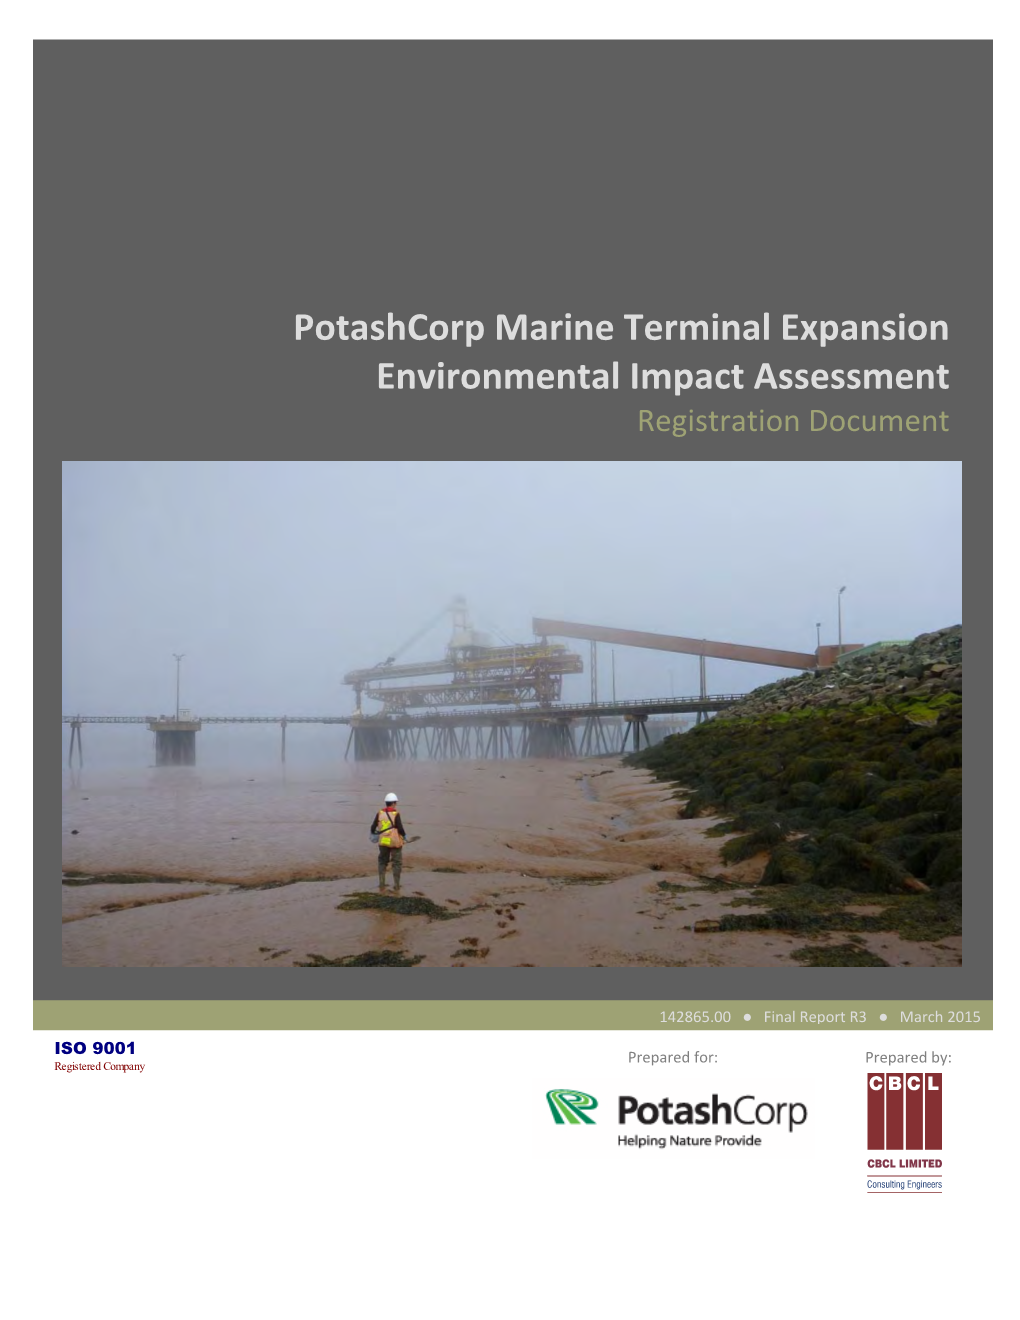 Potashcorp Marine Terminal Expansion Environmental Impact Assessment Registration Document